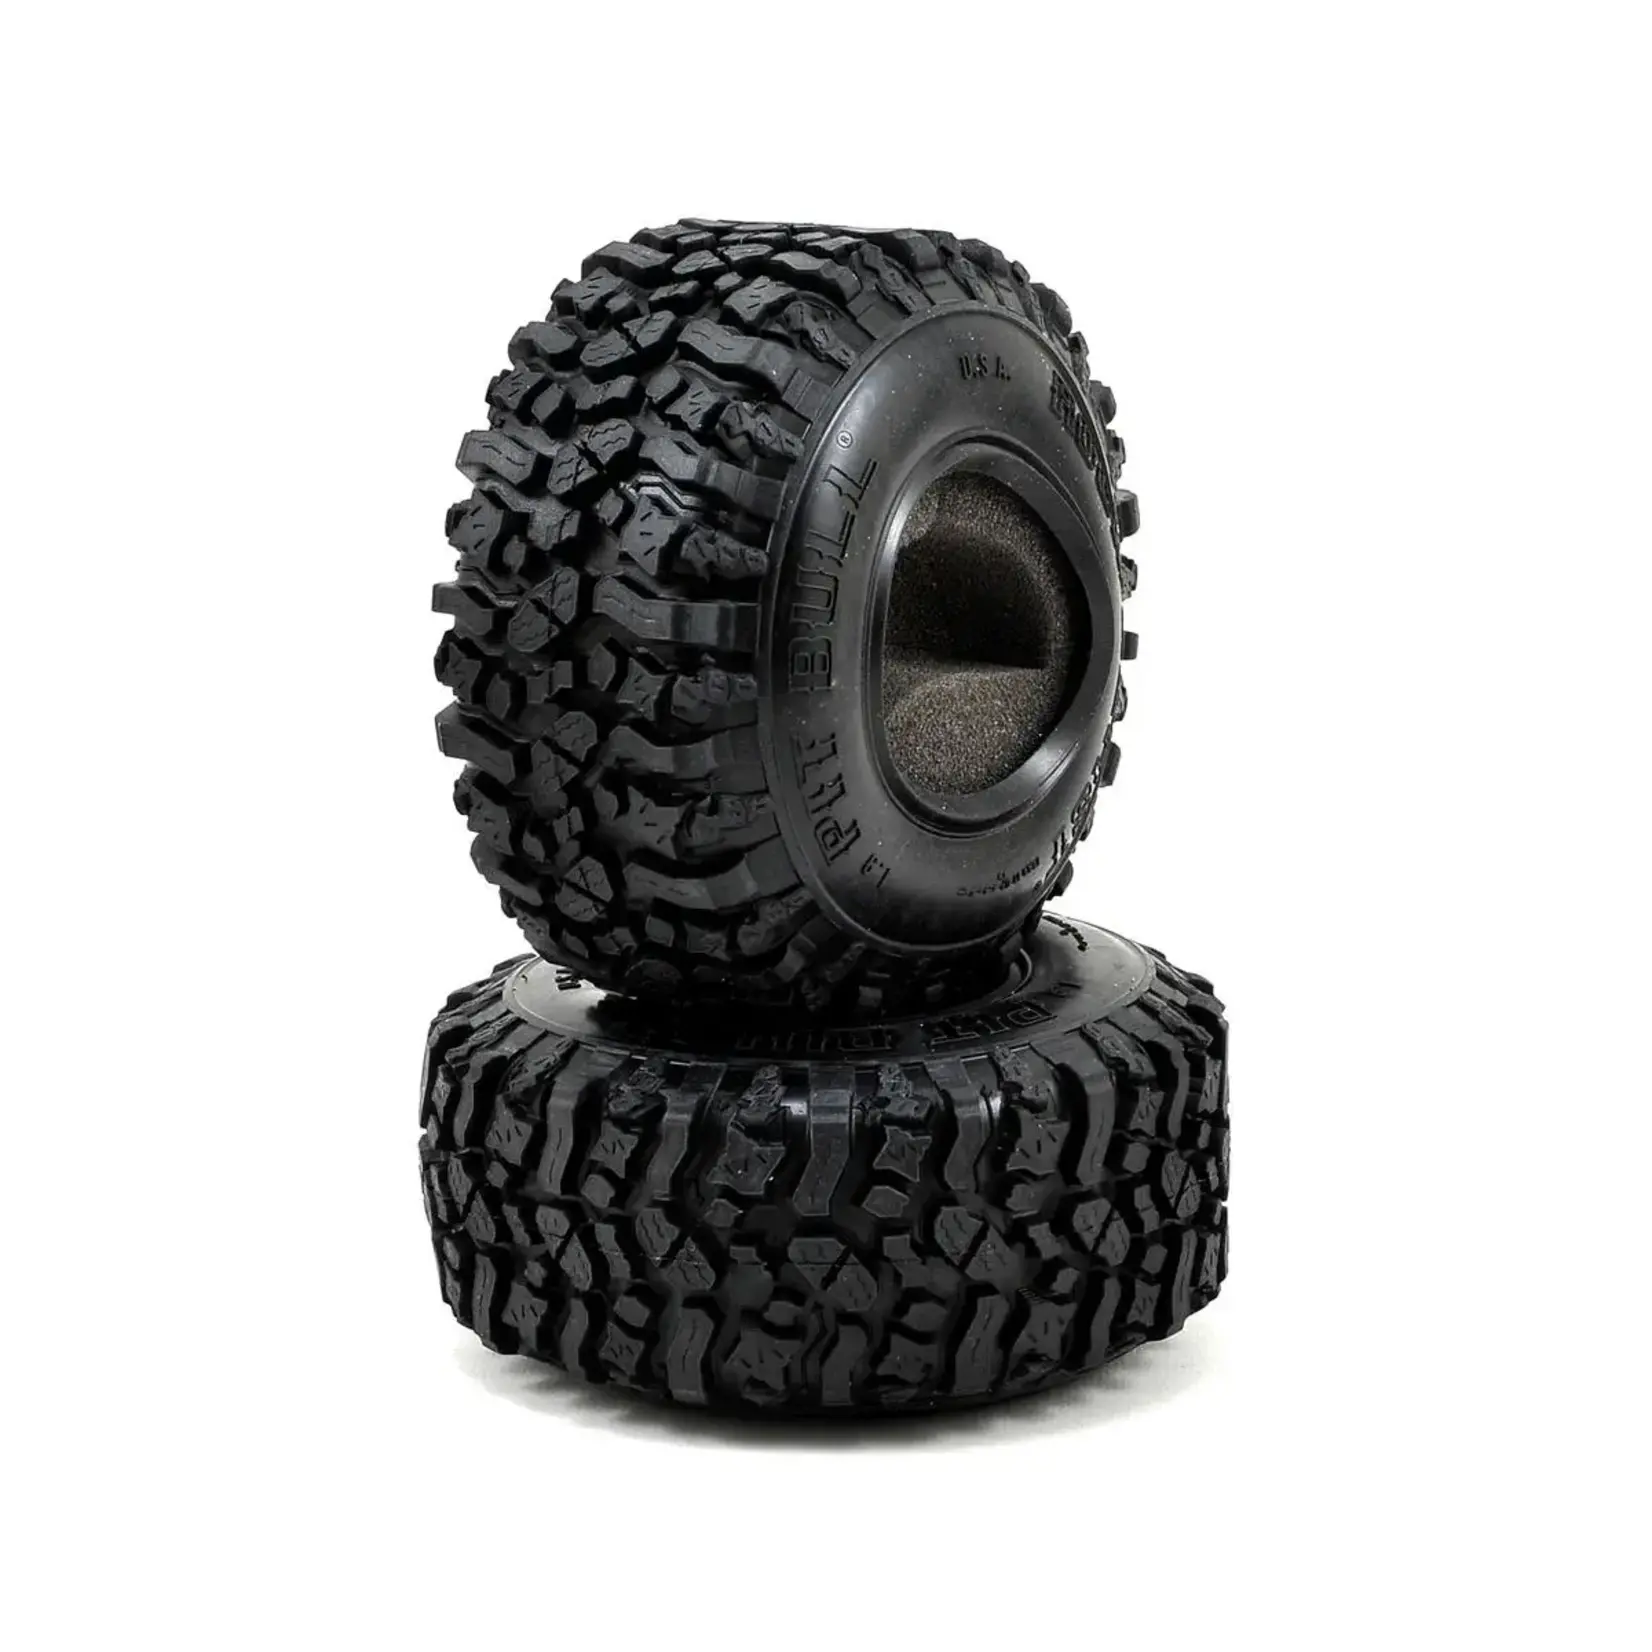 Pit Bull Pit Bull Tires Rock Beast 1.9" Scale Rock Crawler Tires w/Foams (2) (Komp)  #PBTPB9003NK